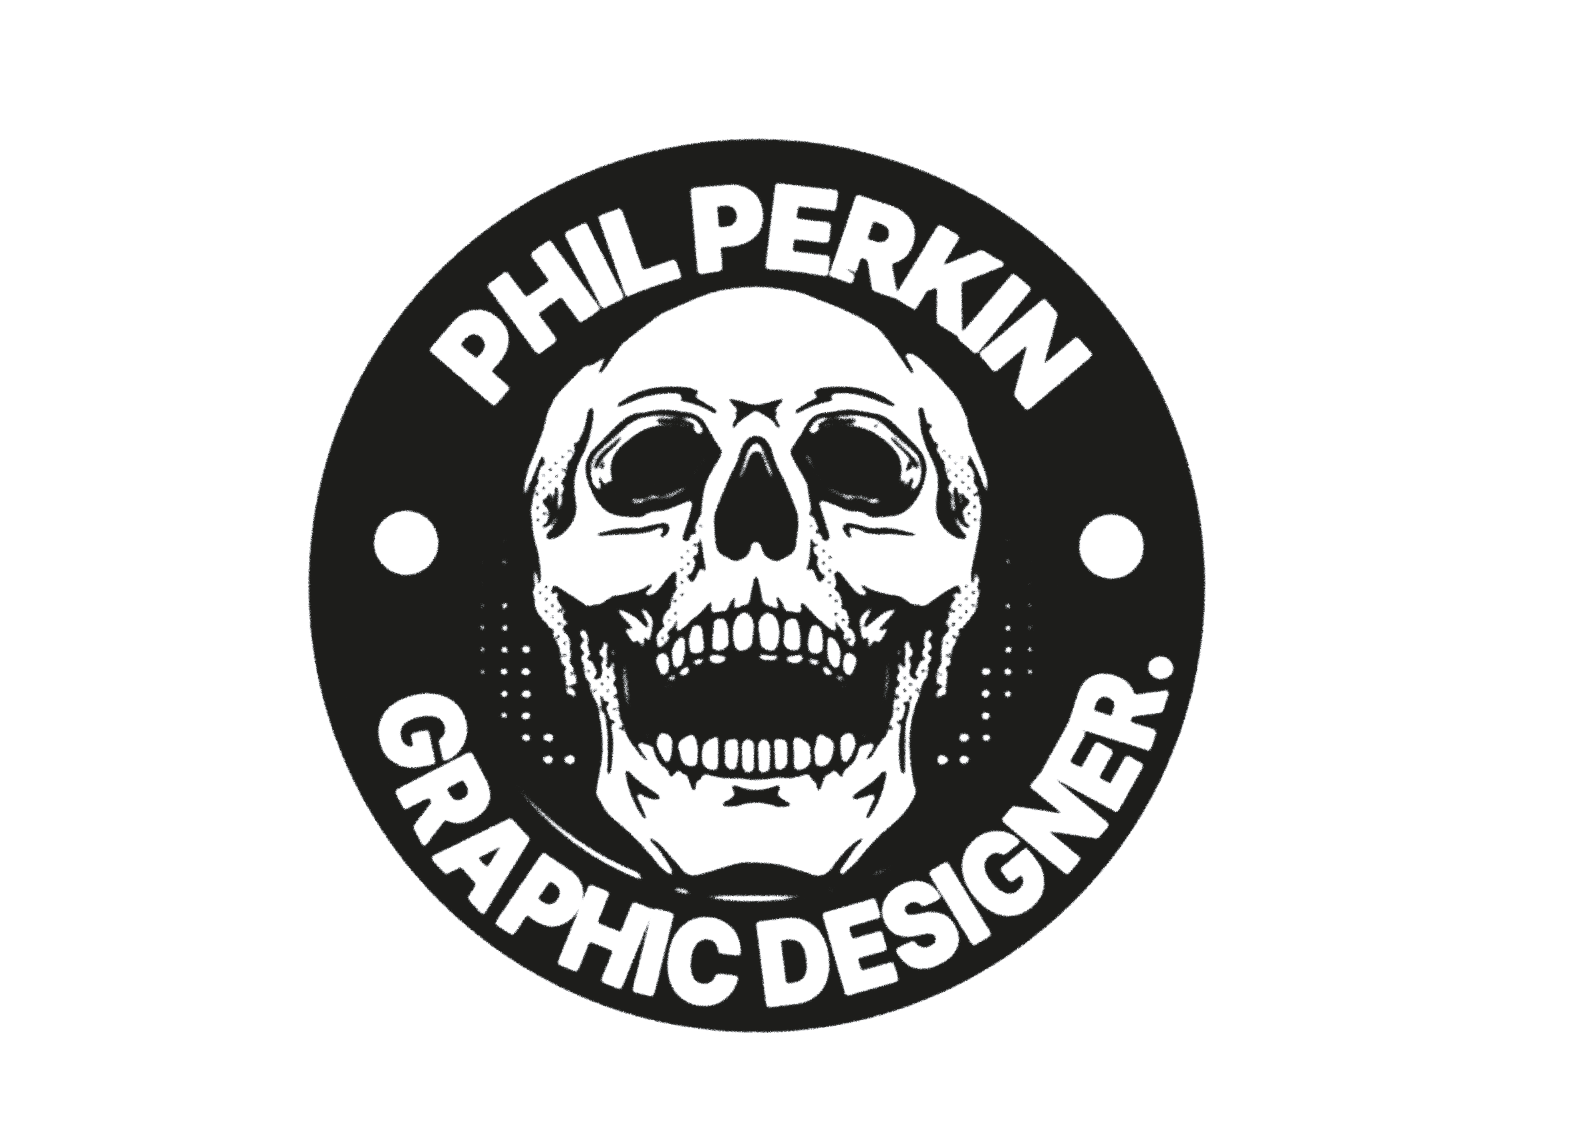 Phil Perkin